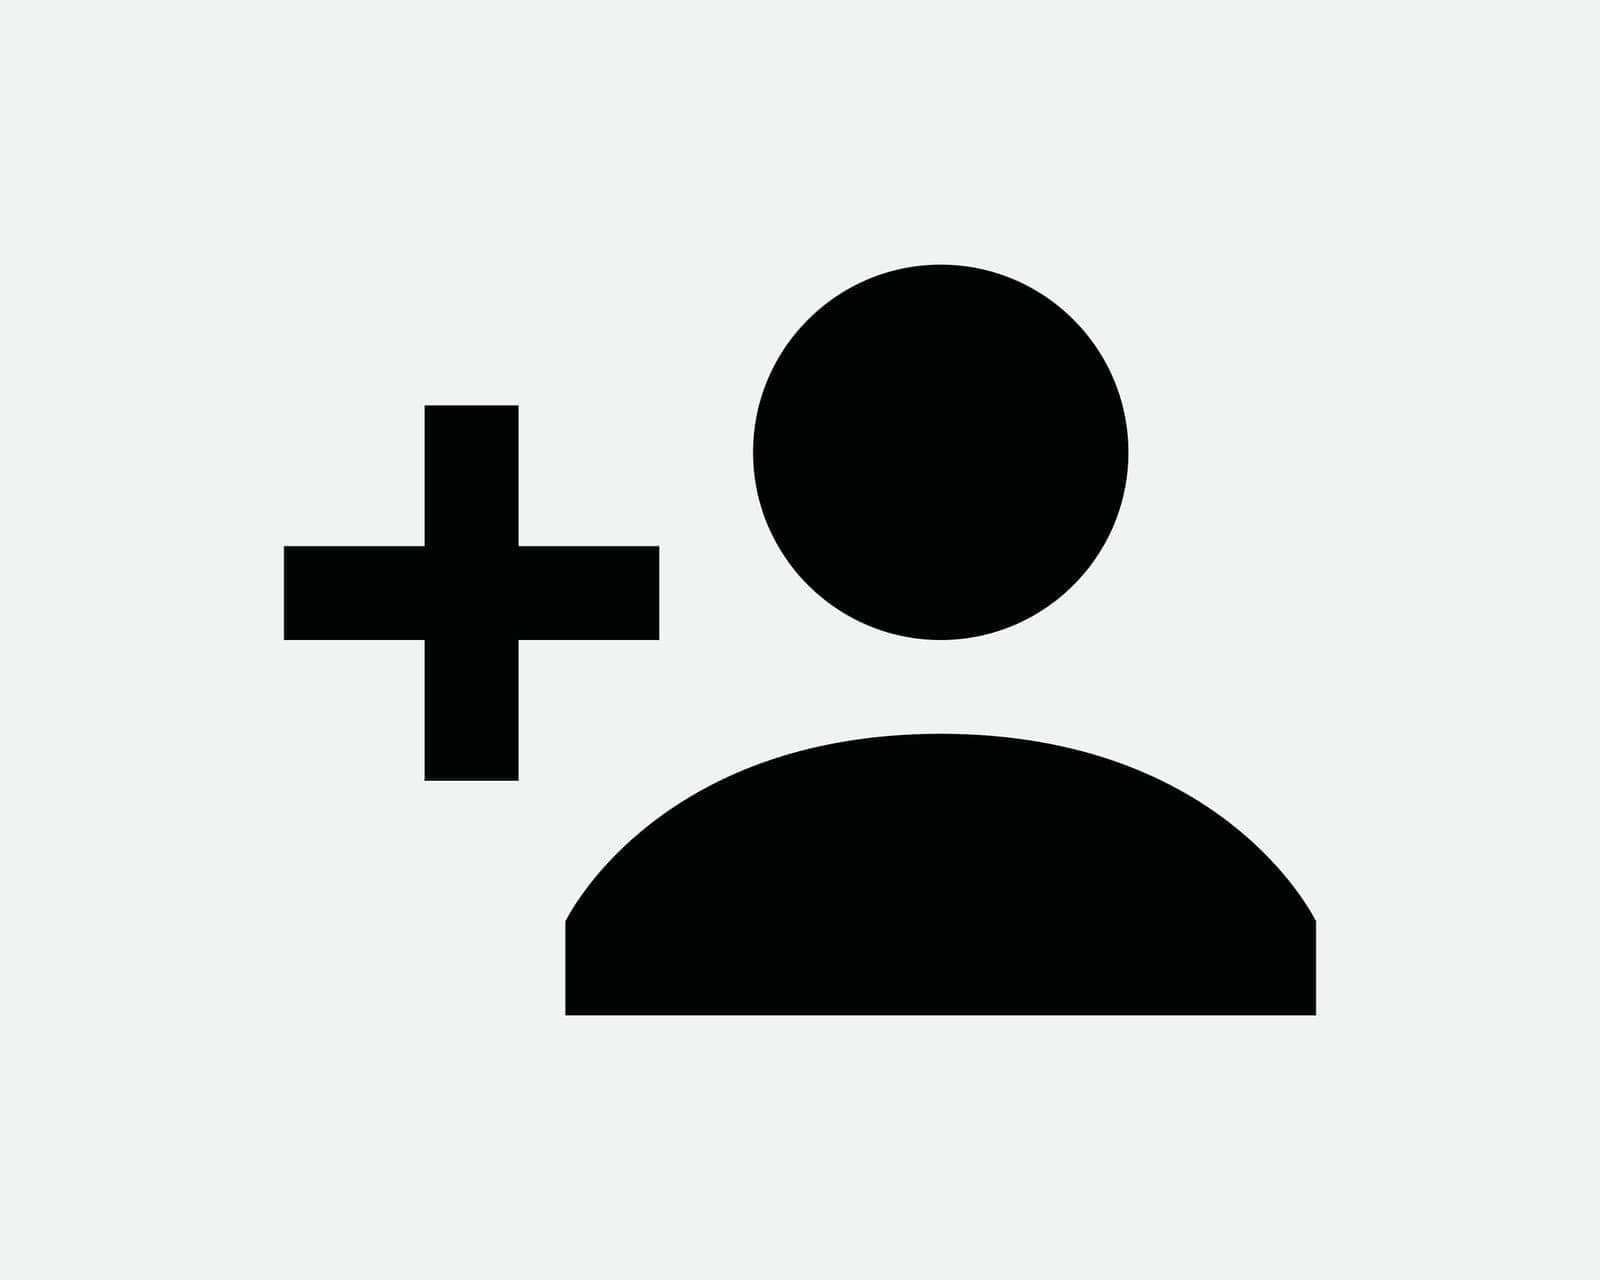 Add User Business Person Member Profile Avatar Plus Cross Mark Black and White Icon Sign Symbol Vector Artwork Clipart Illustration